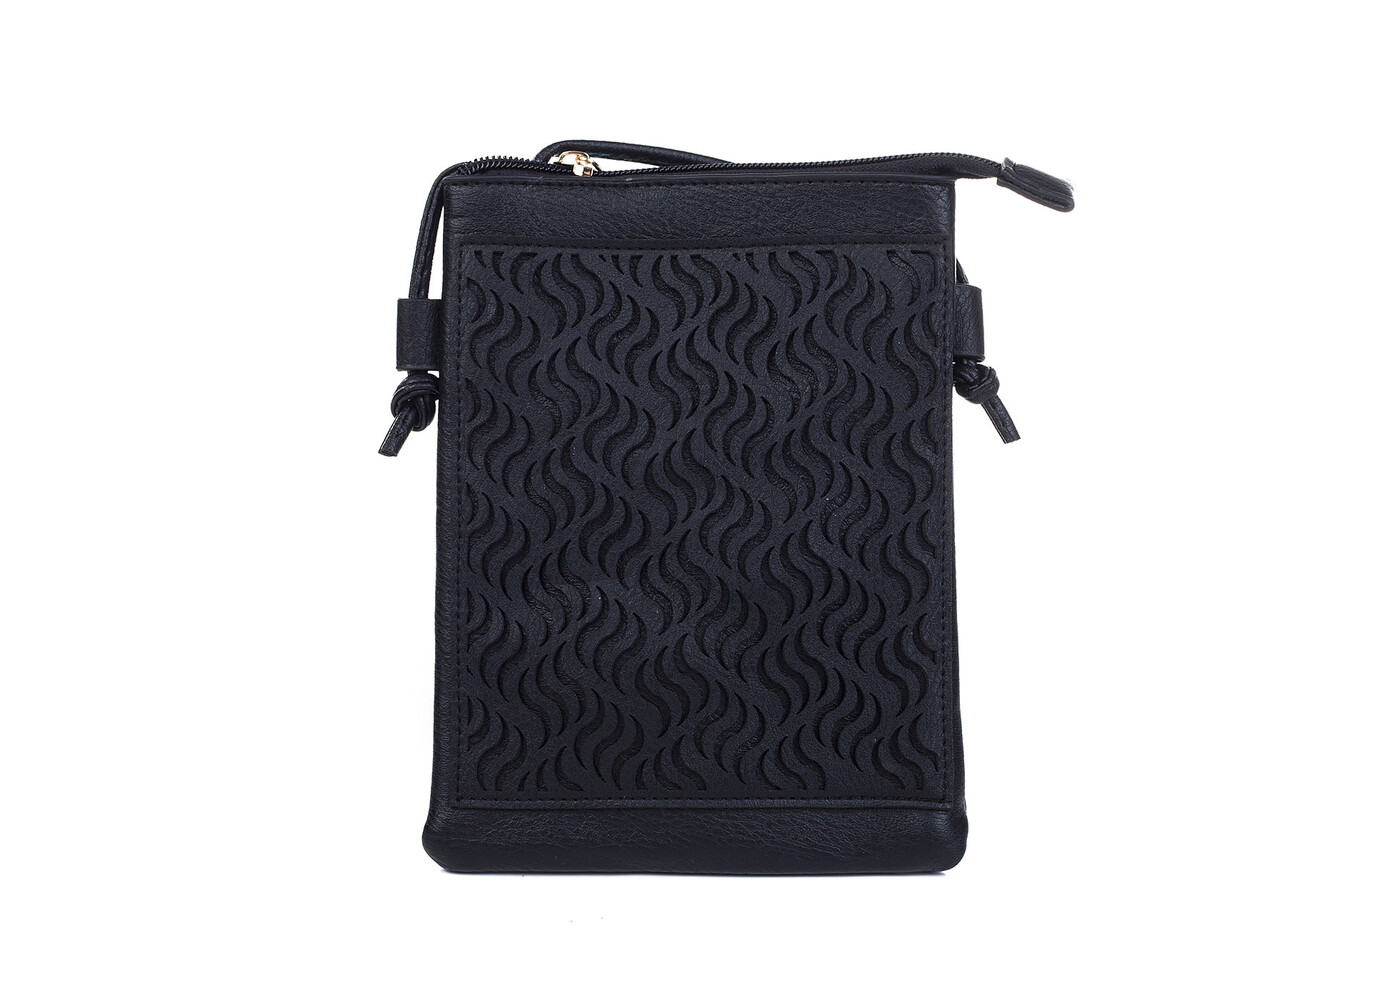 Ivys Clothing & Fashion Accessories Black Crossover Handbag